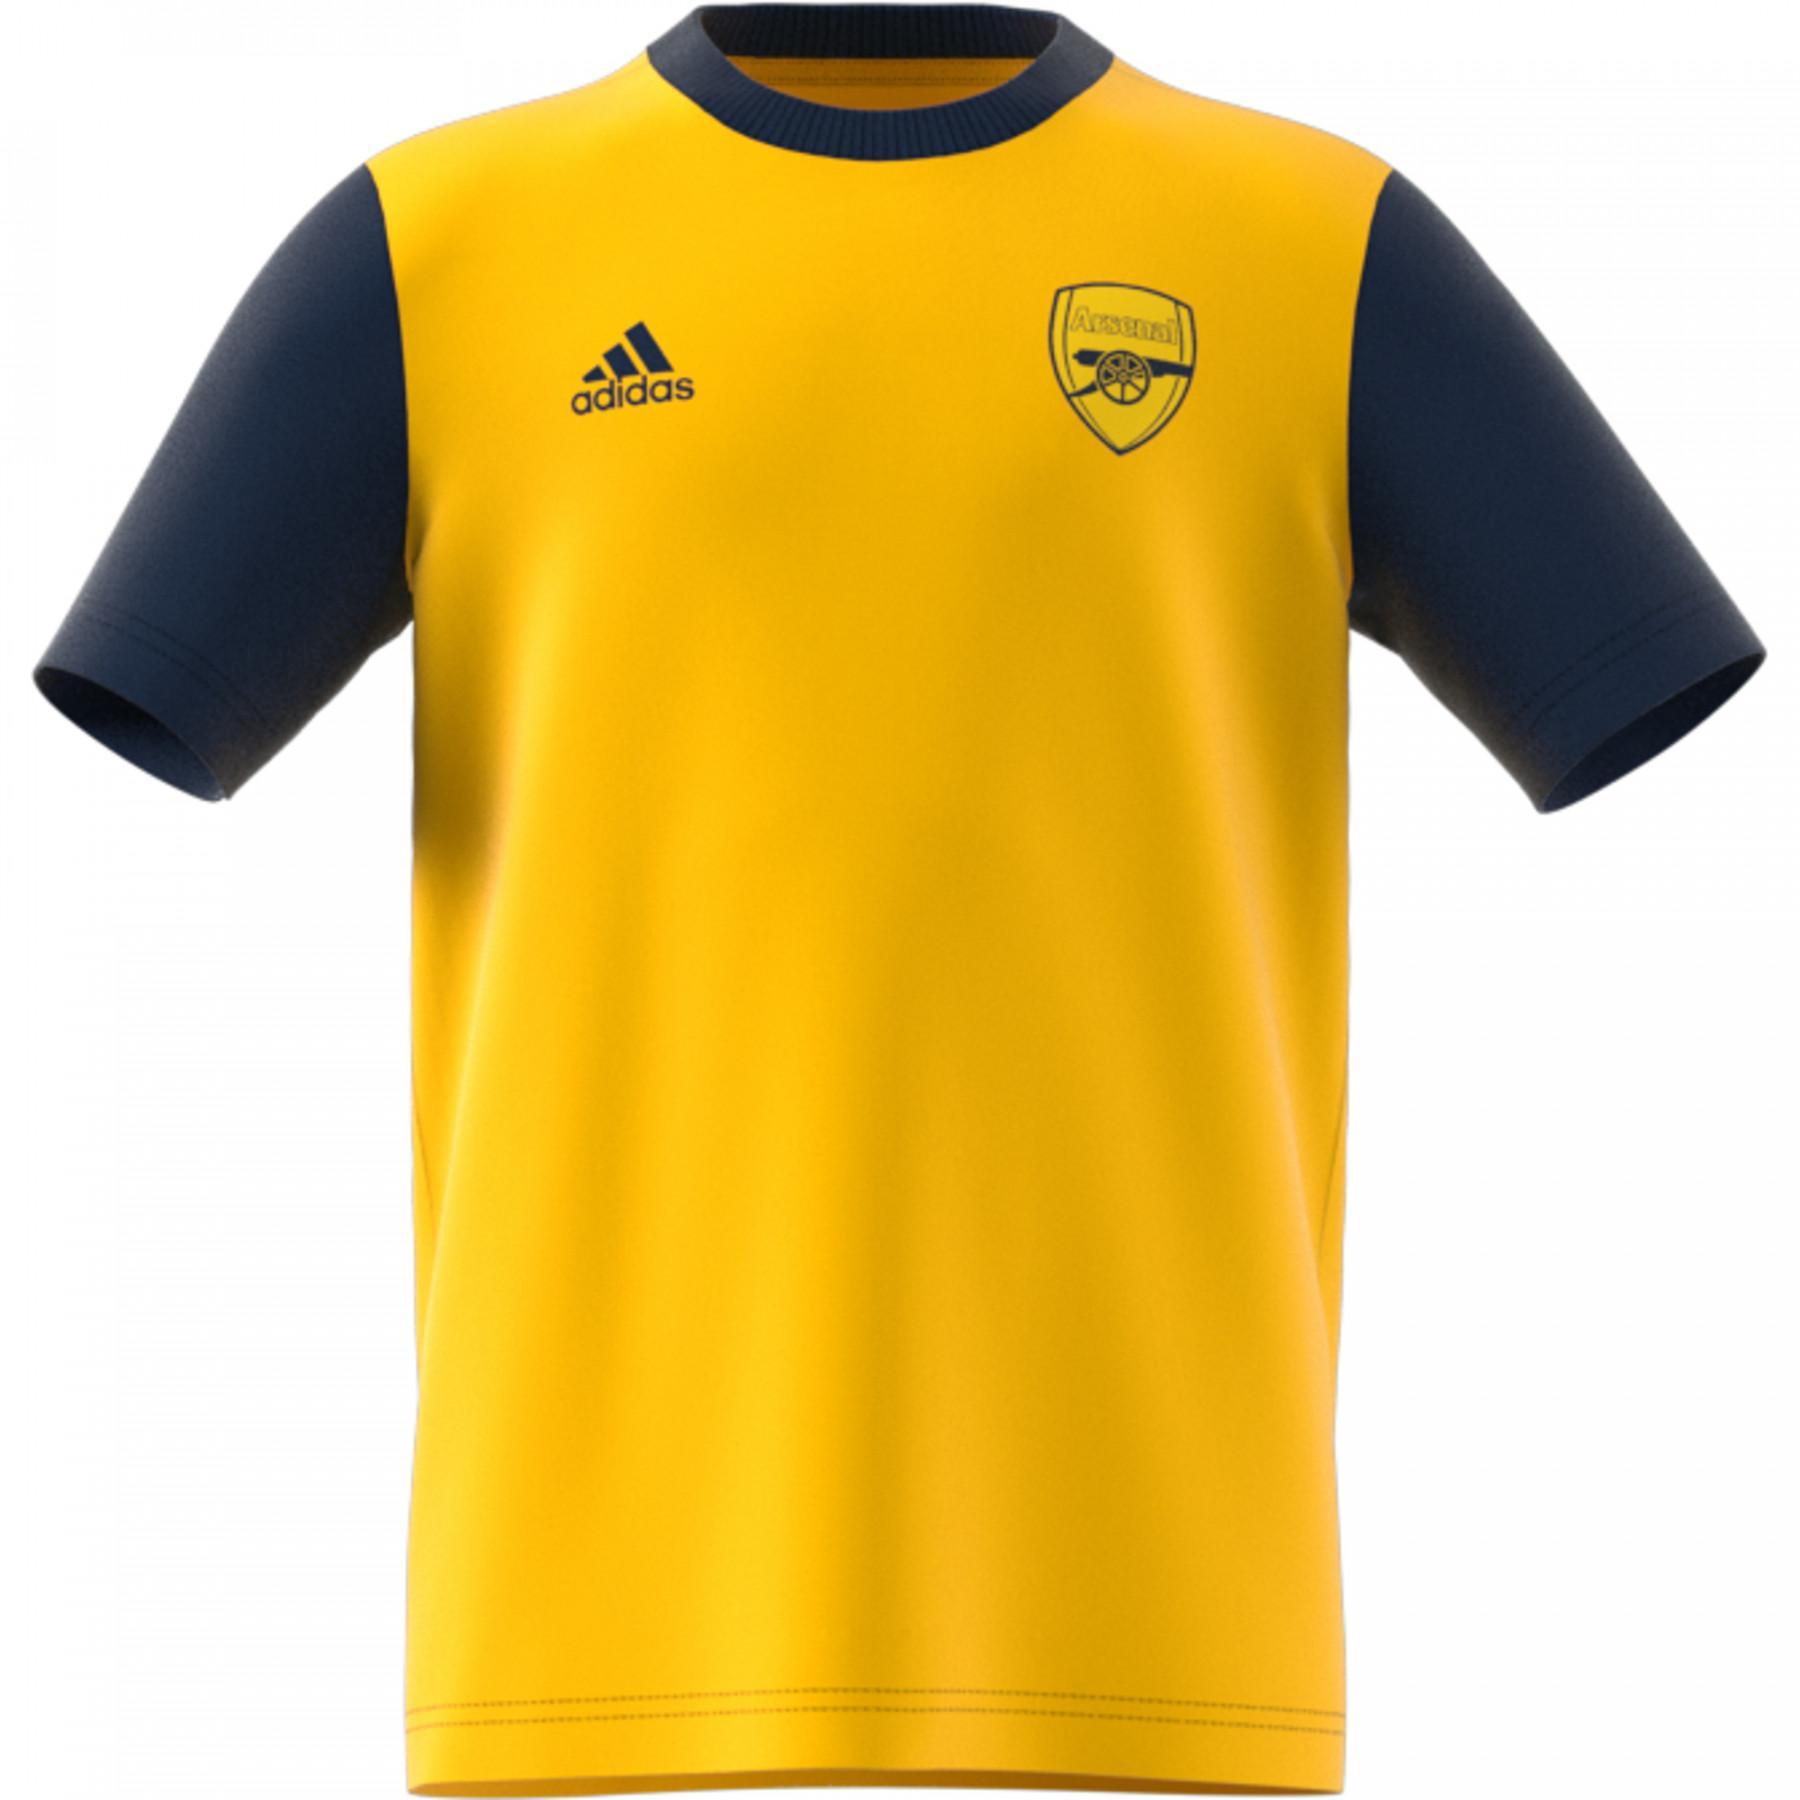 Camiseta para niños Arsenal